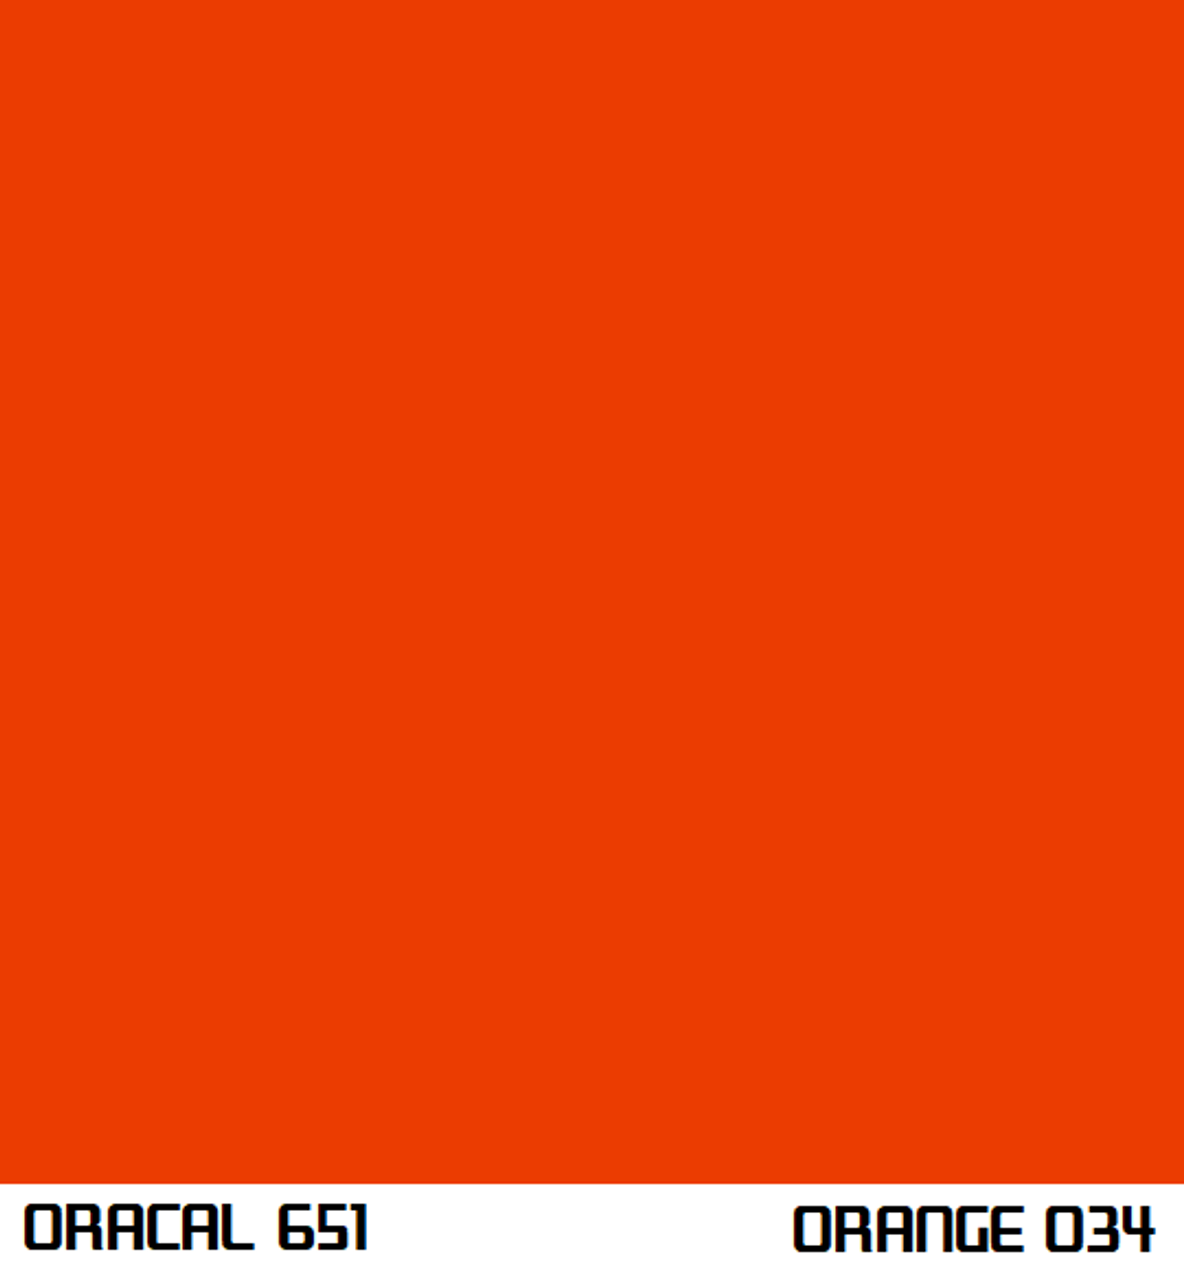 Oracal 651 Glossy Vinyl Rolls - Light Orange, 12 inch x 6 Foot